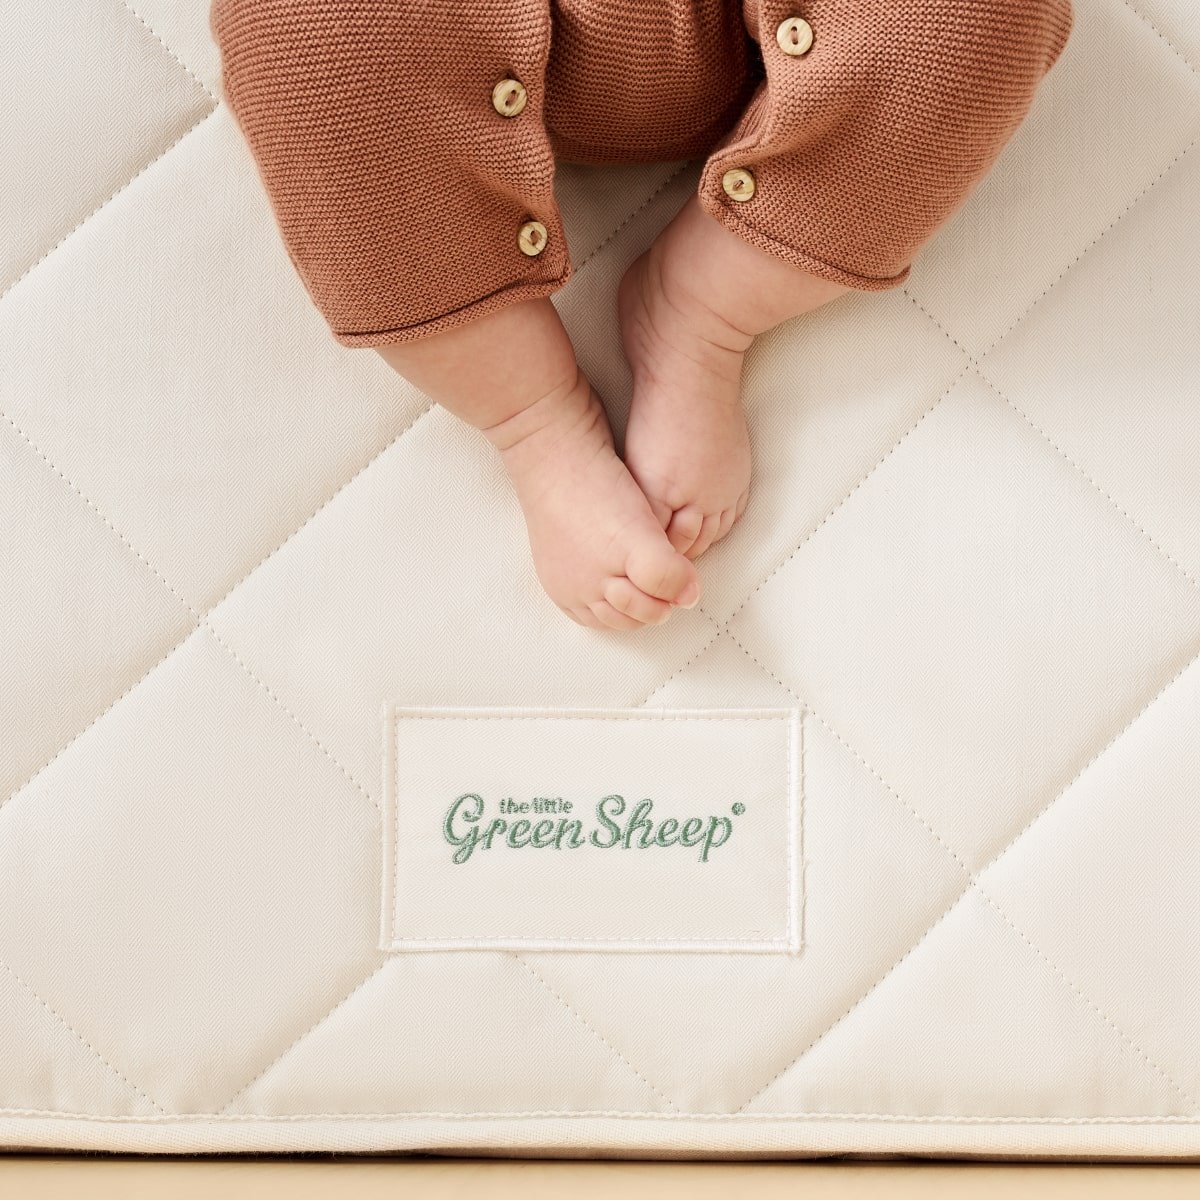 green sheep cot bed mattress